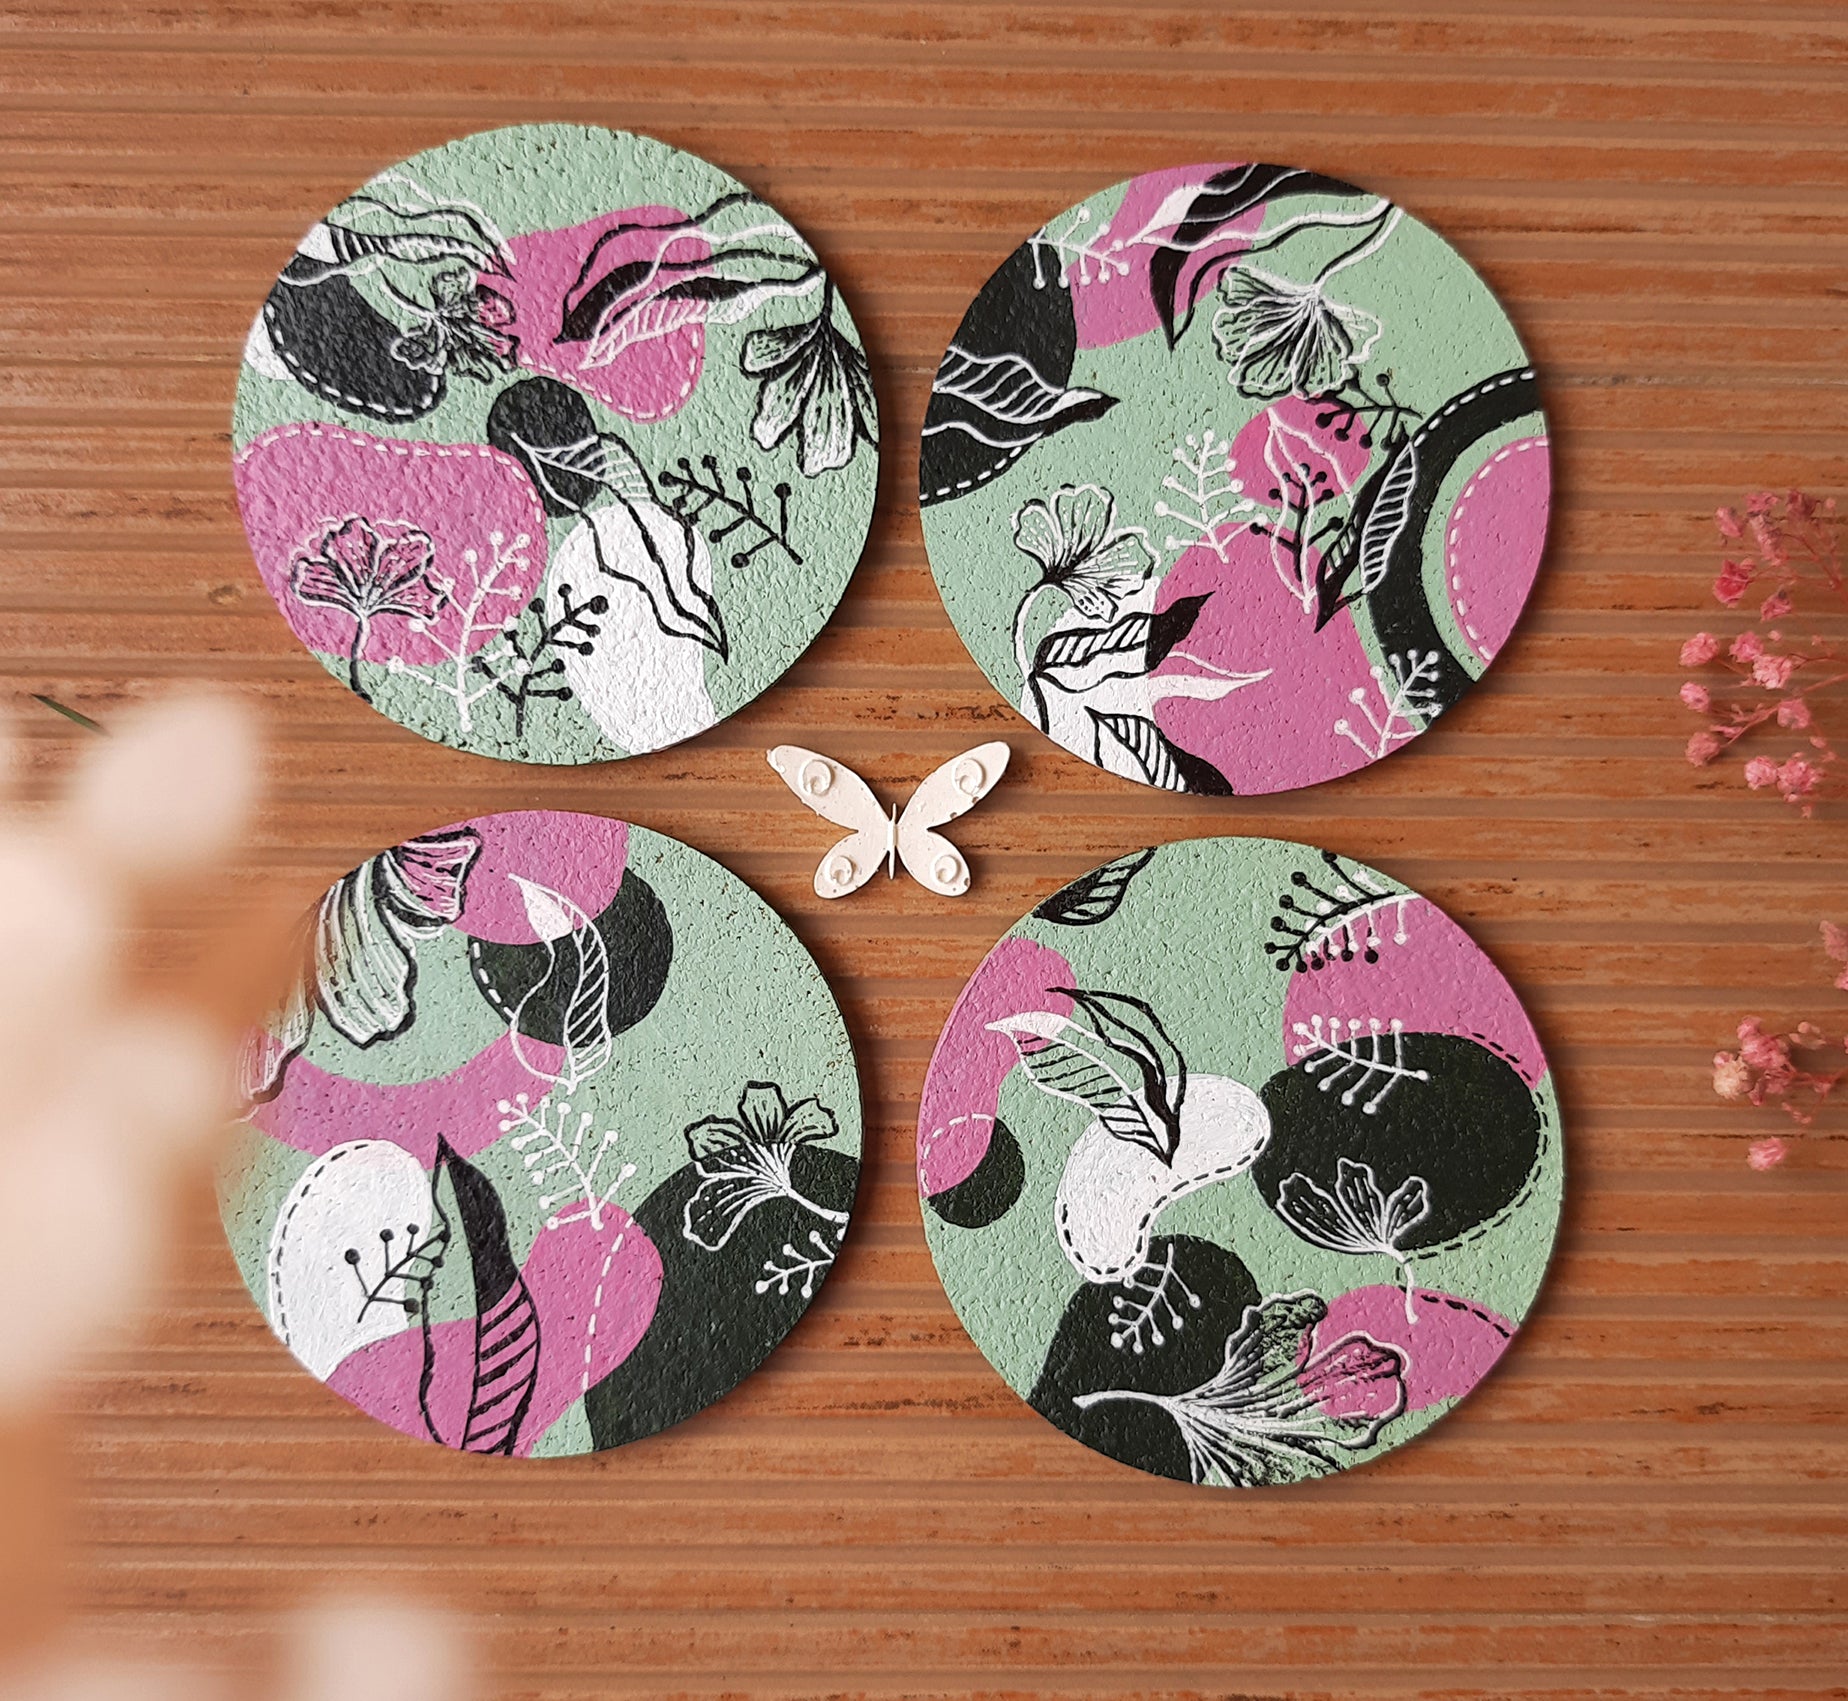 Boho Style Handpainted Coasters